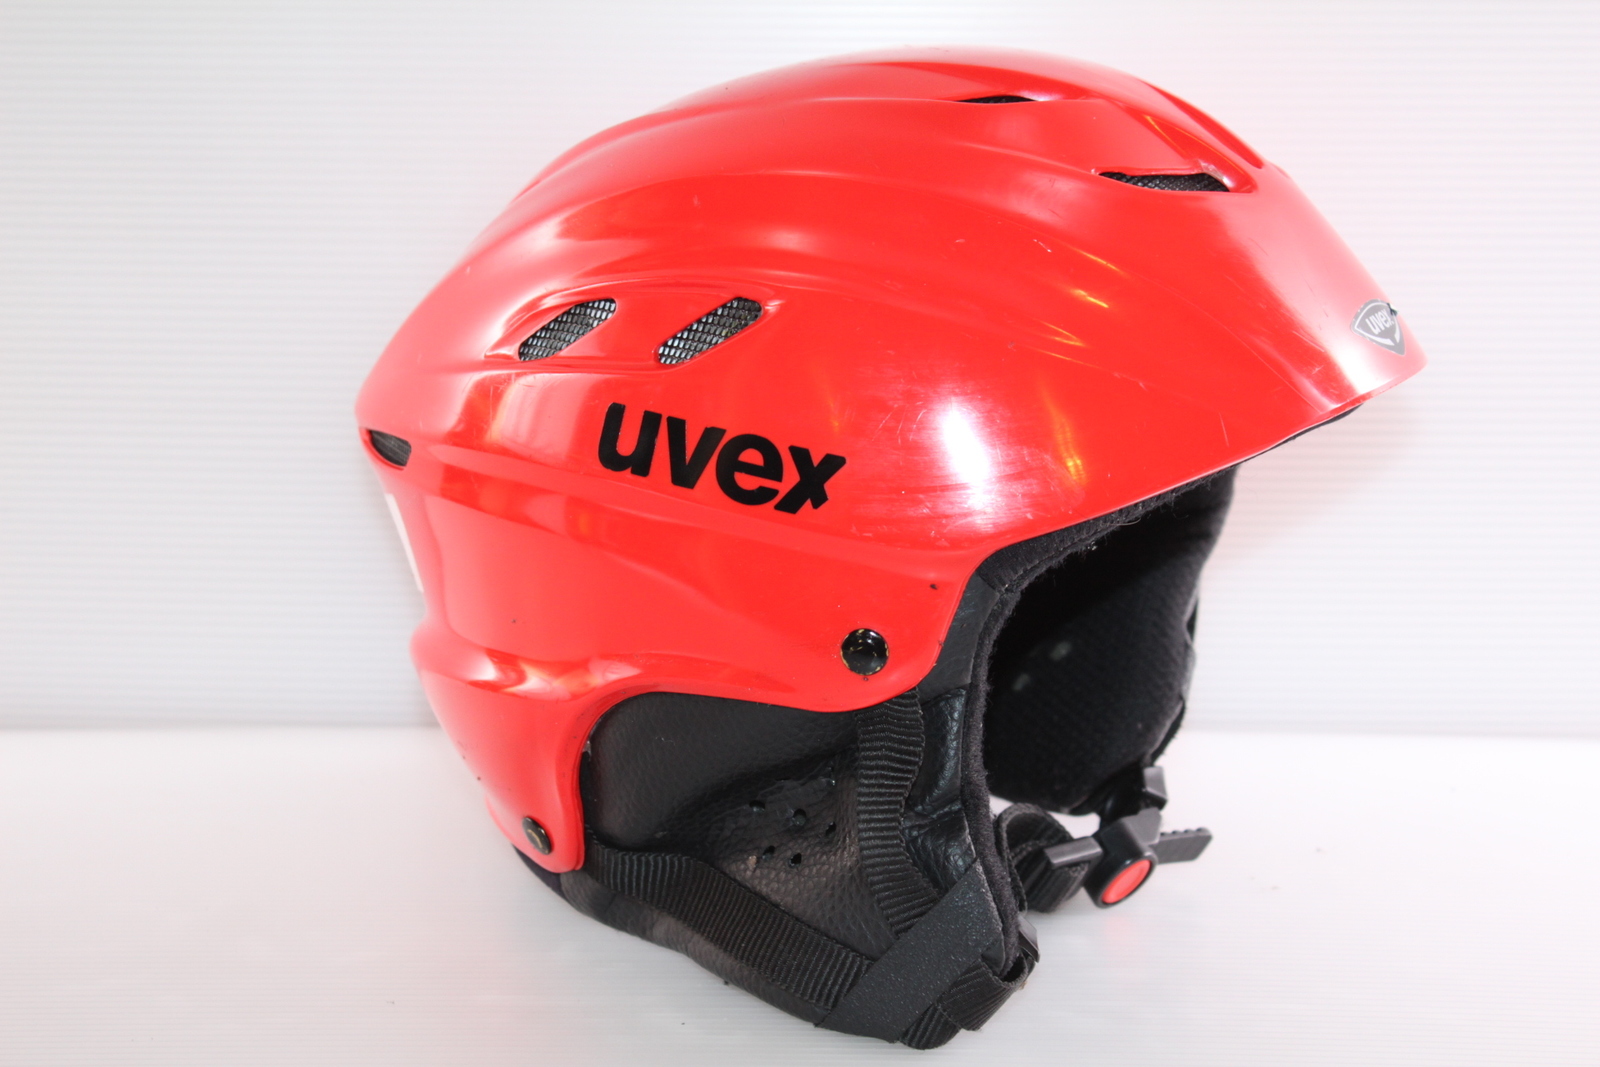 Dámská lyžařská helma Uvex  - posuvná vel. 55 - 58